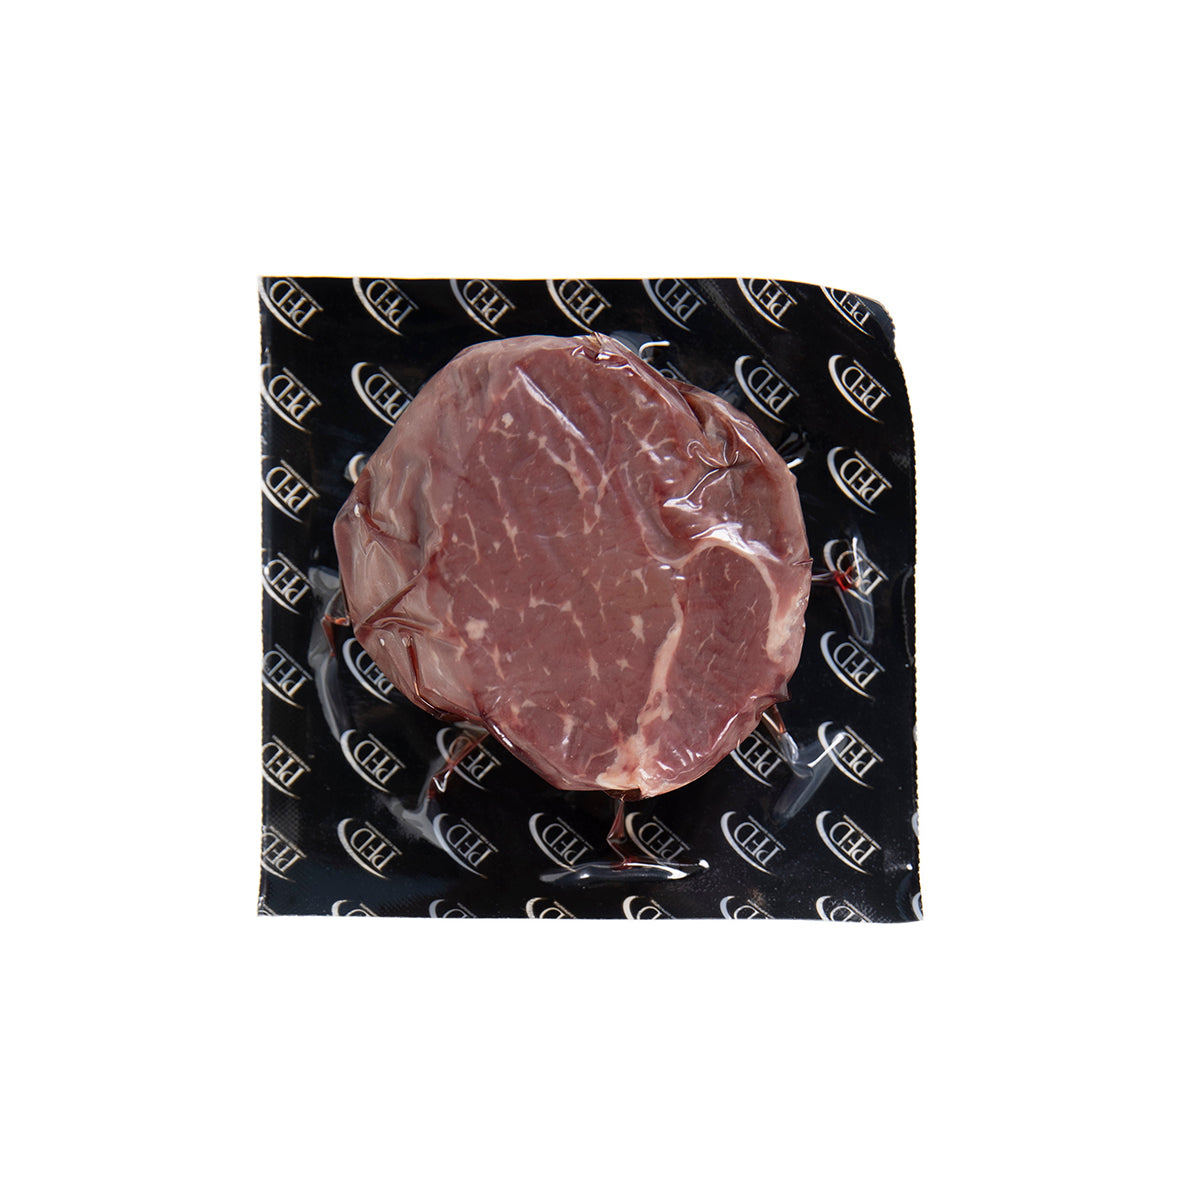 Prime Food Distributor (Pfd) Prime Beef Top Sirloin Butt Steaks 8 OZ